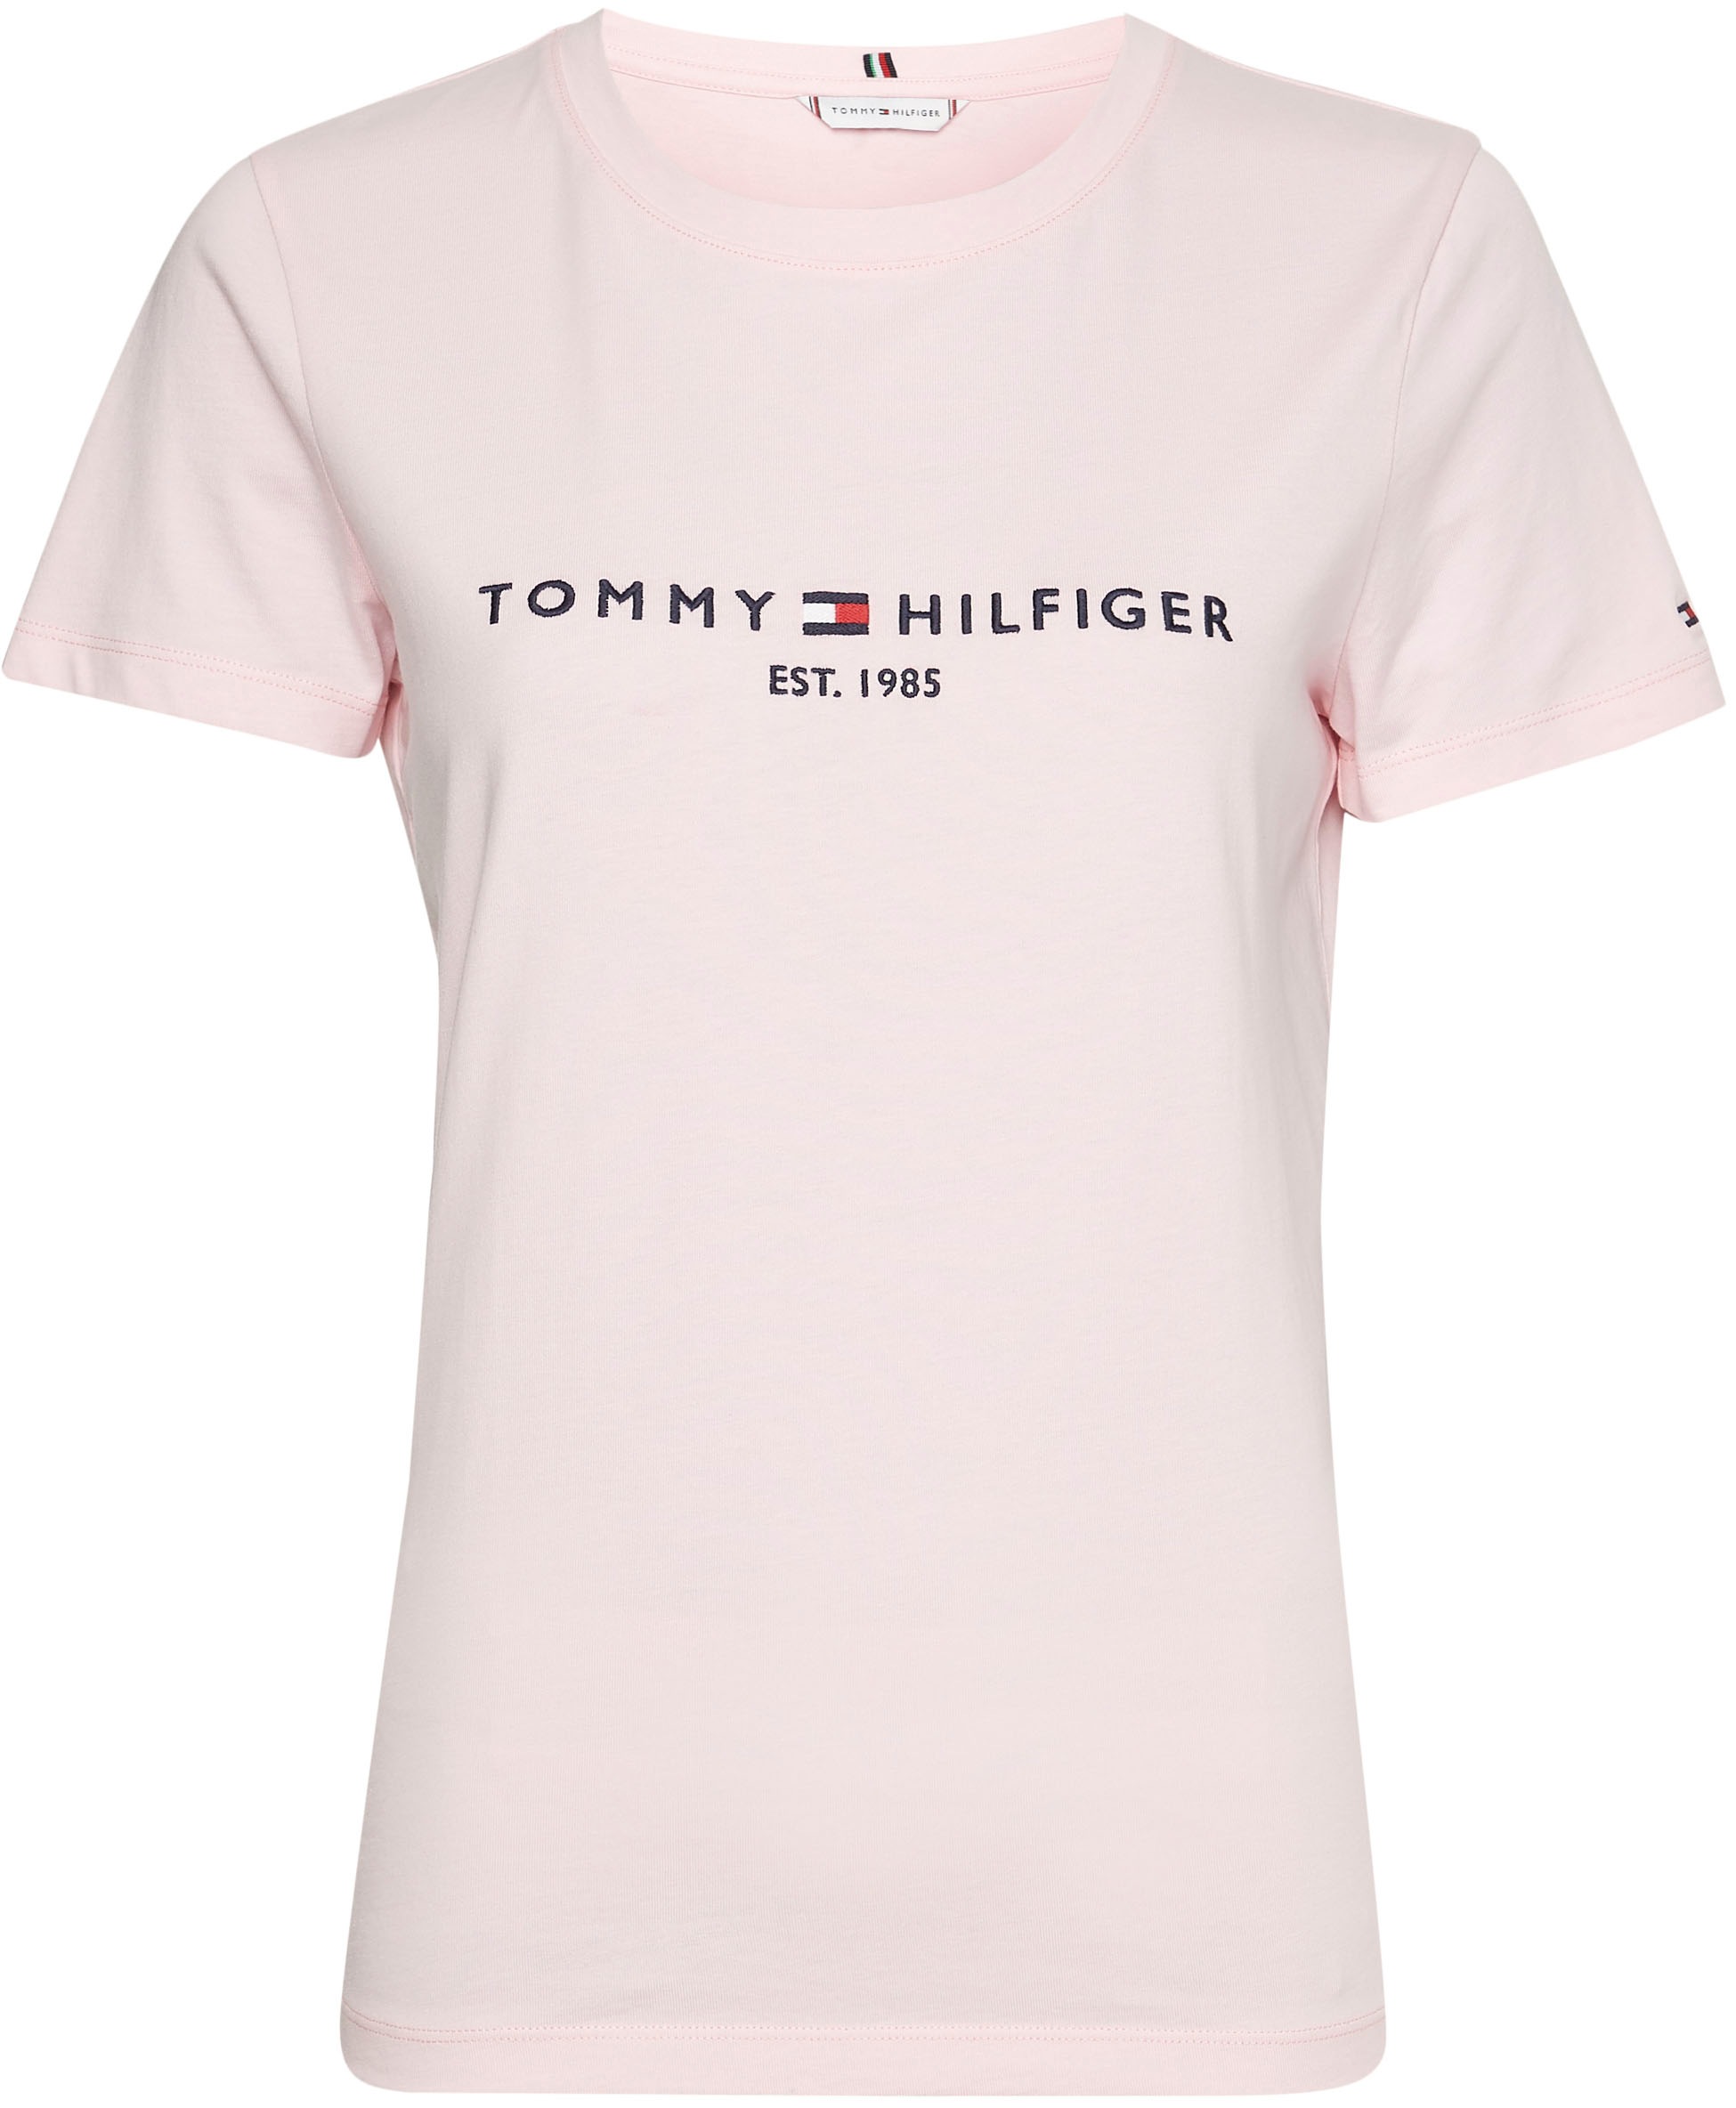 HILFIGER REG Tommy Logo-Schriftzug mit Hilfiger TEE Linear SS«, Hilfiger ♕ bei »TH ESS C-NK Tommy Rundhalsshirt